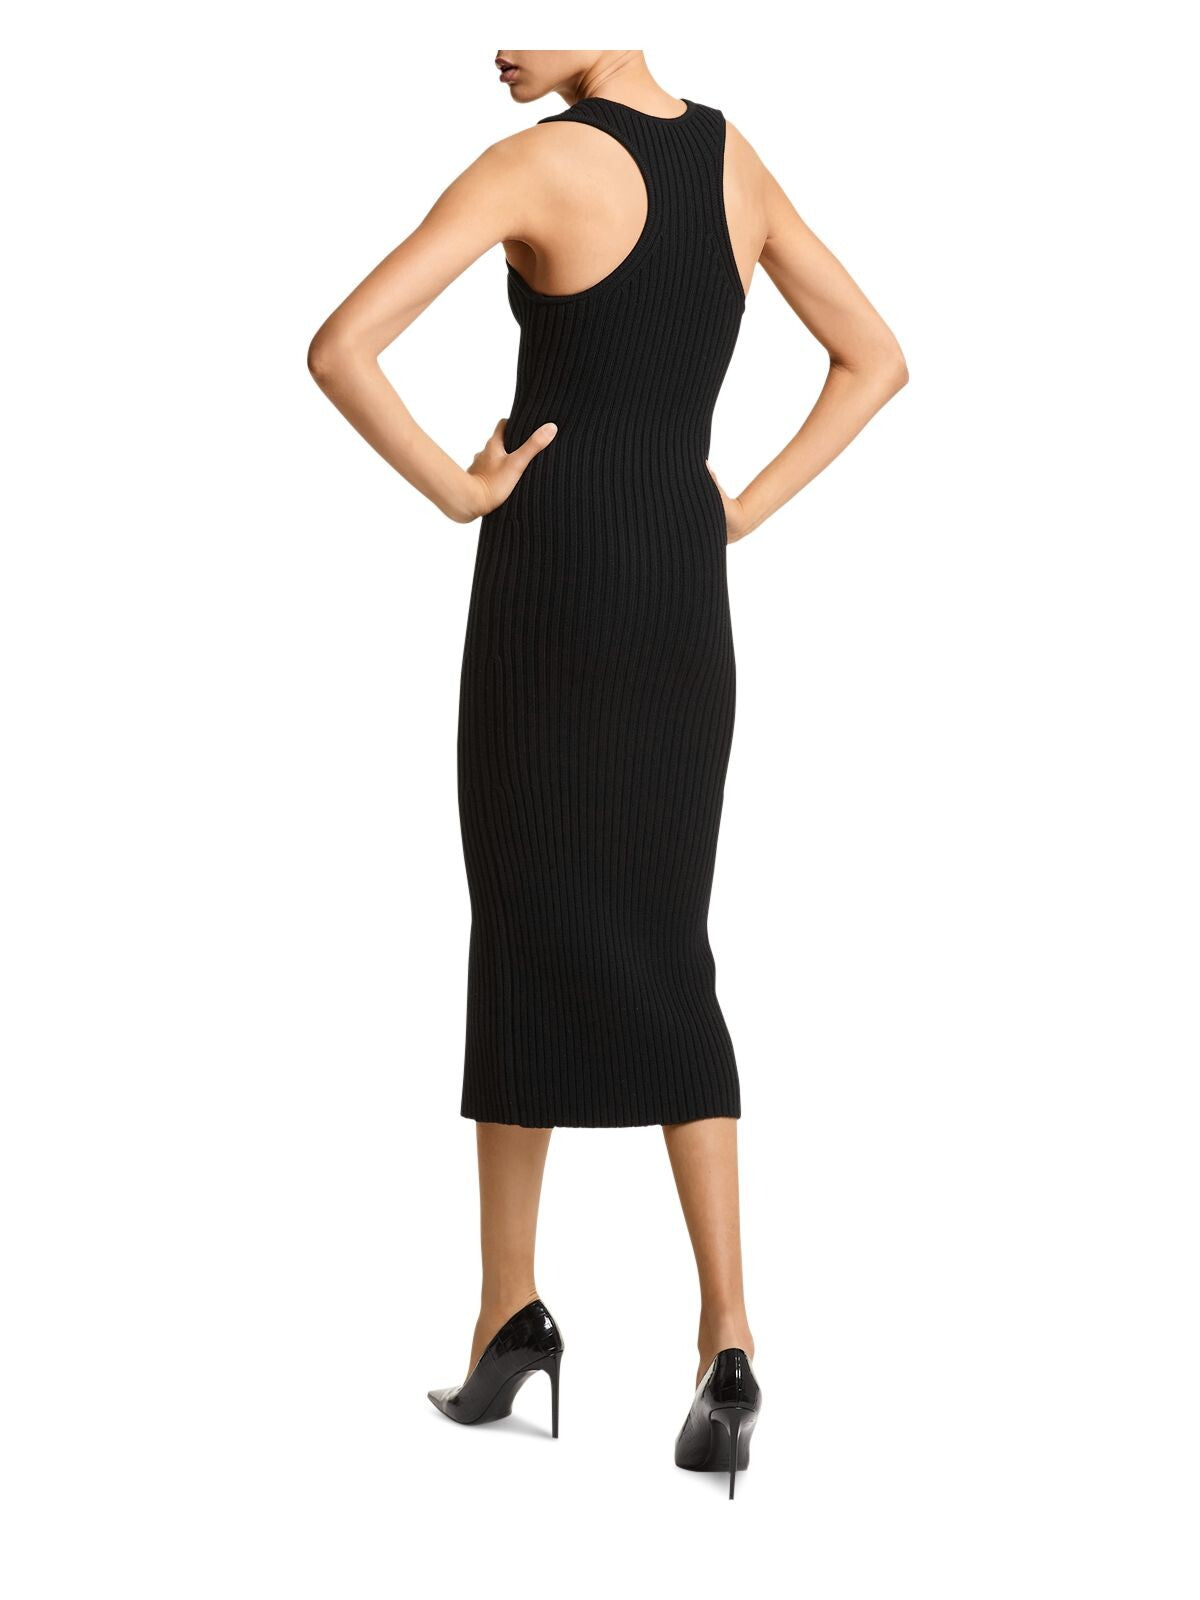 MICHAEL KORS Womens Black Zippered Ribbed Tank Dress Unlined Sleeveless Scoop Neck Midi Cocktail Dress M